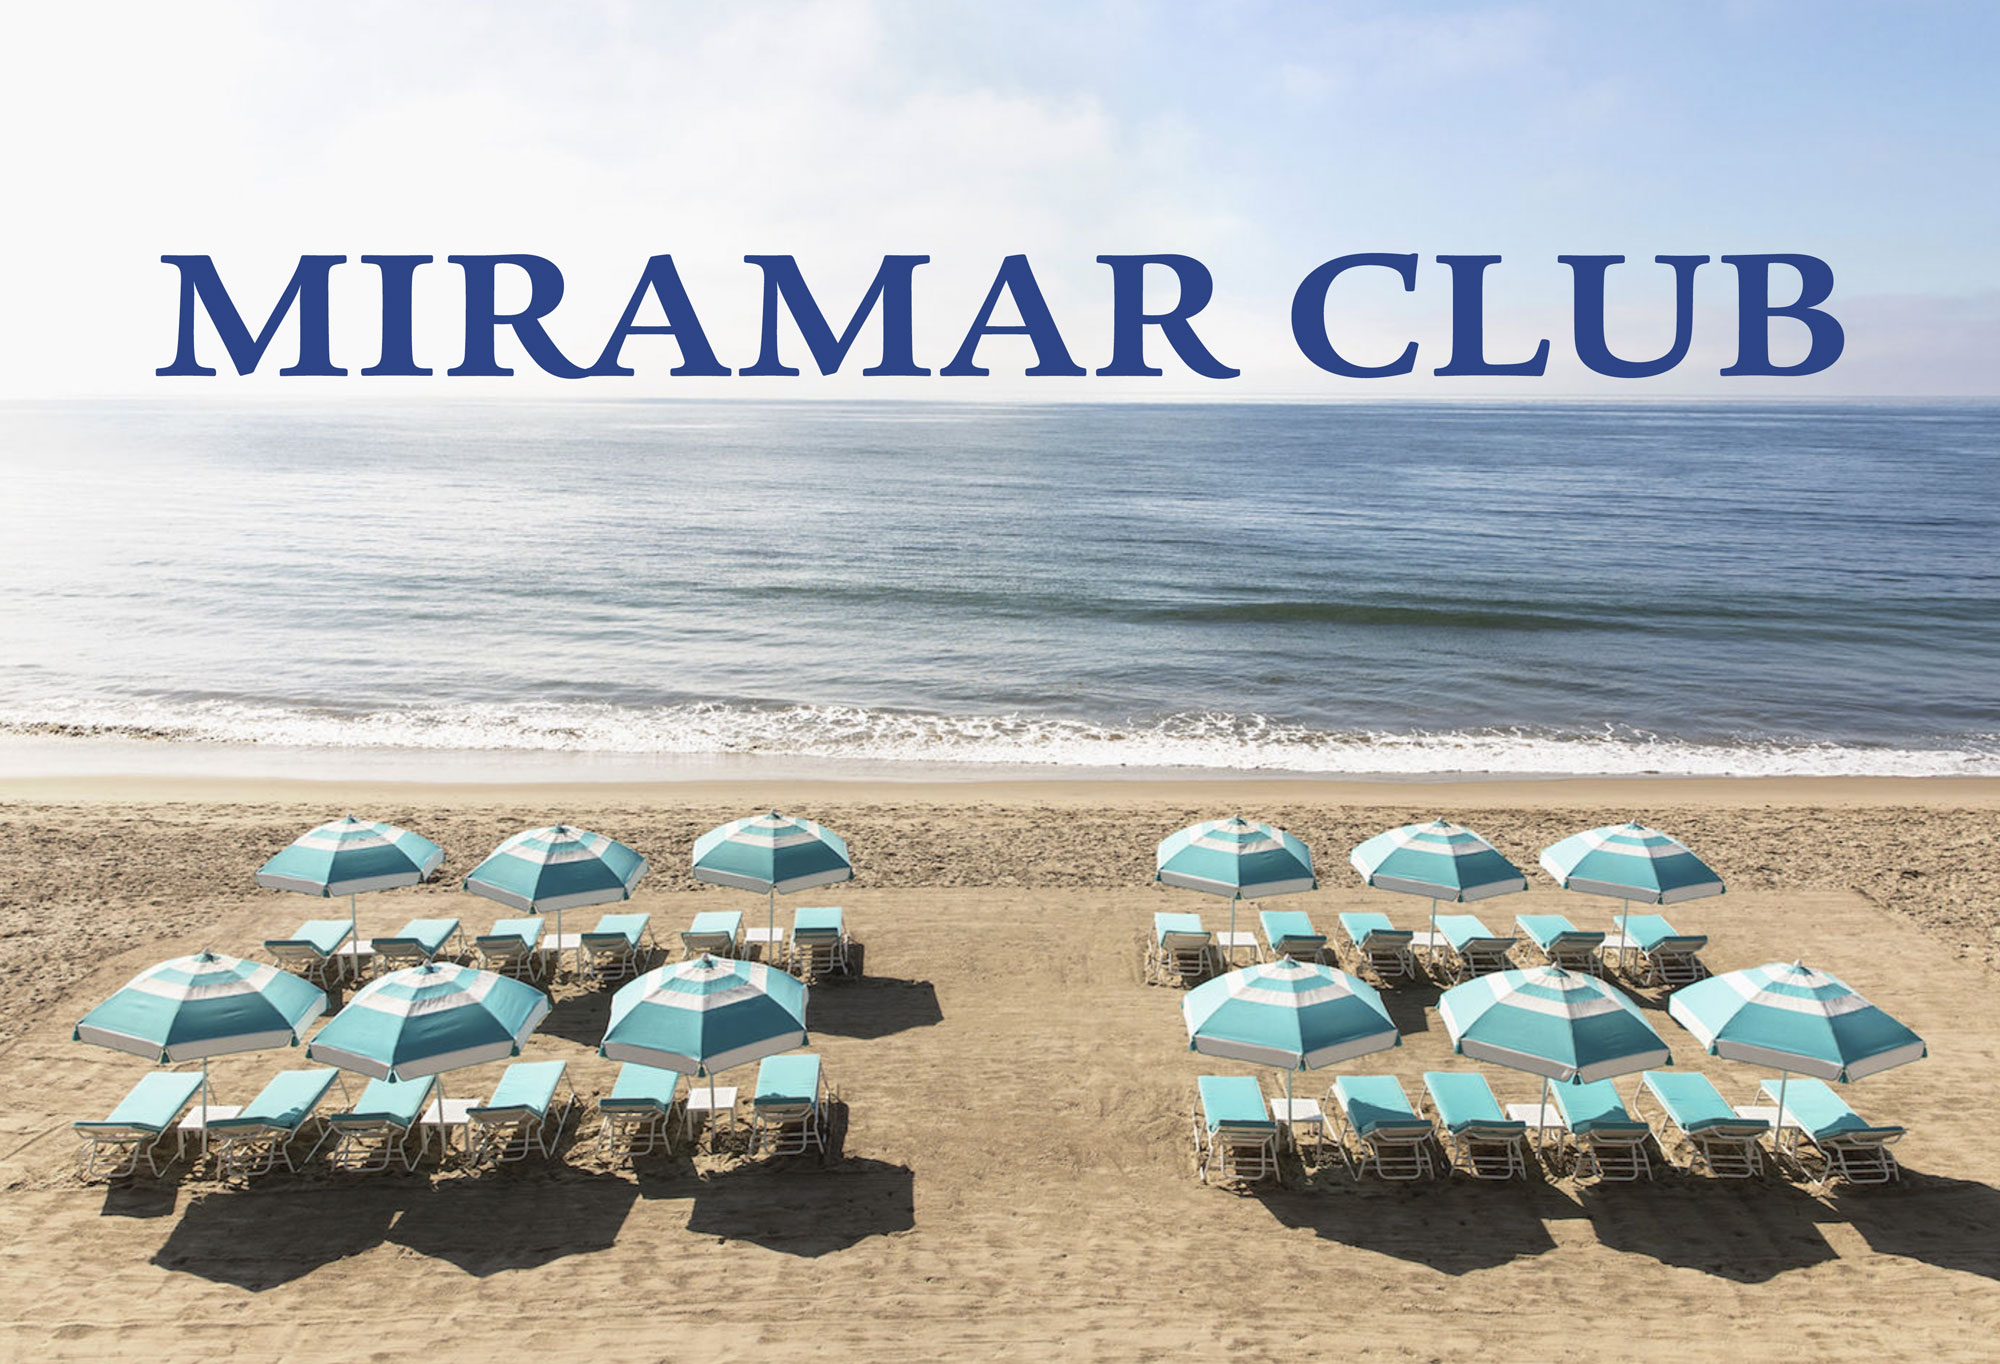 Miramar Club - Private Social Club in Montecito, CA